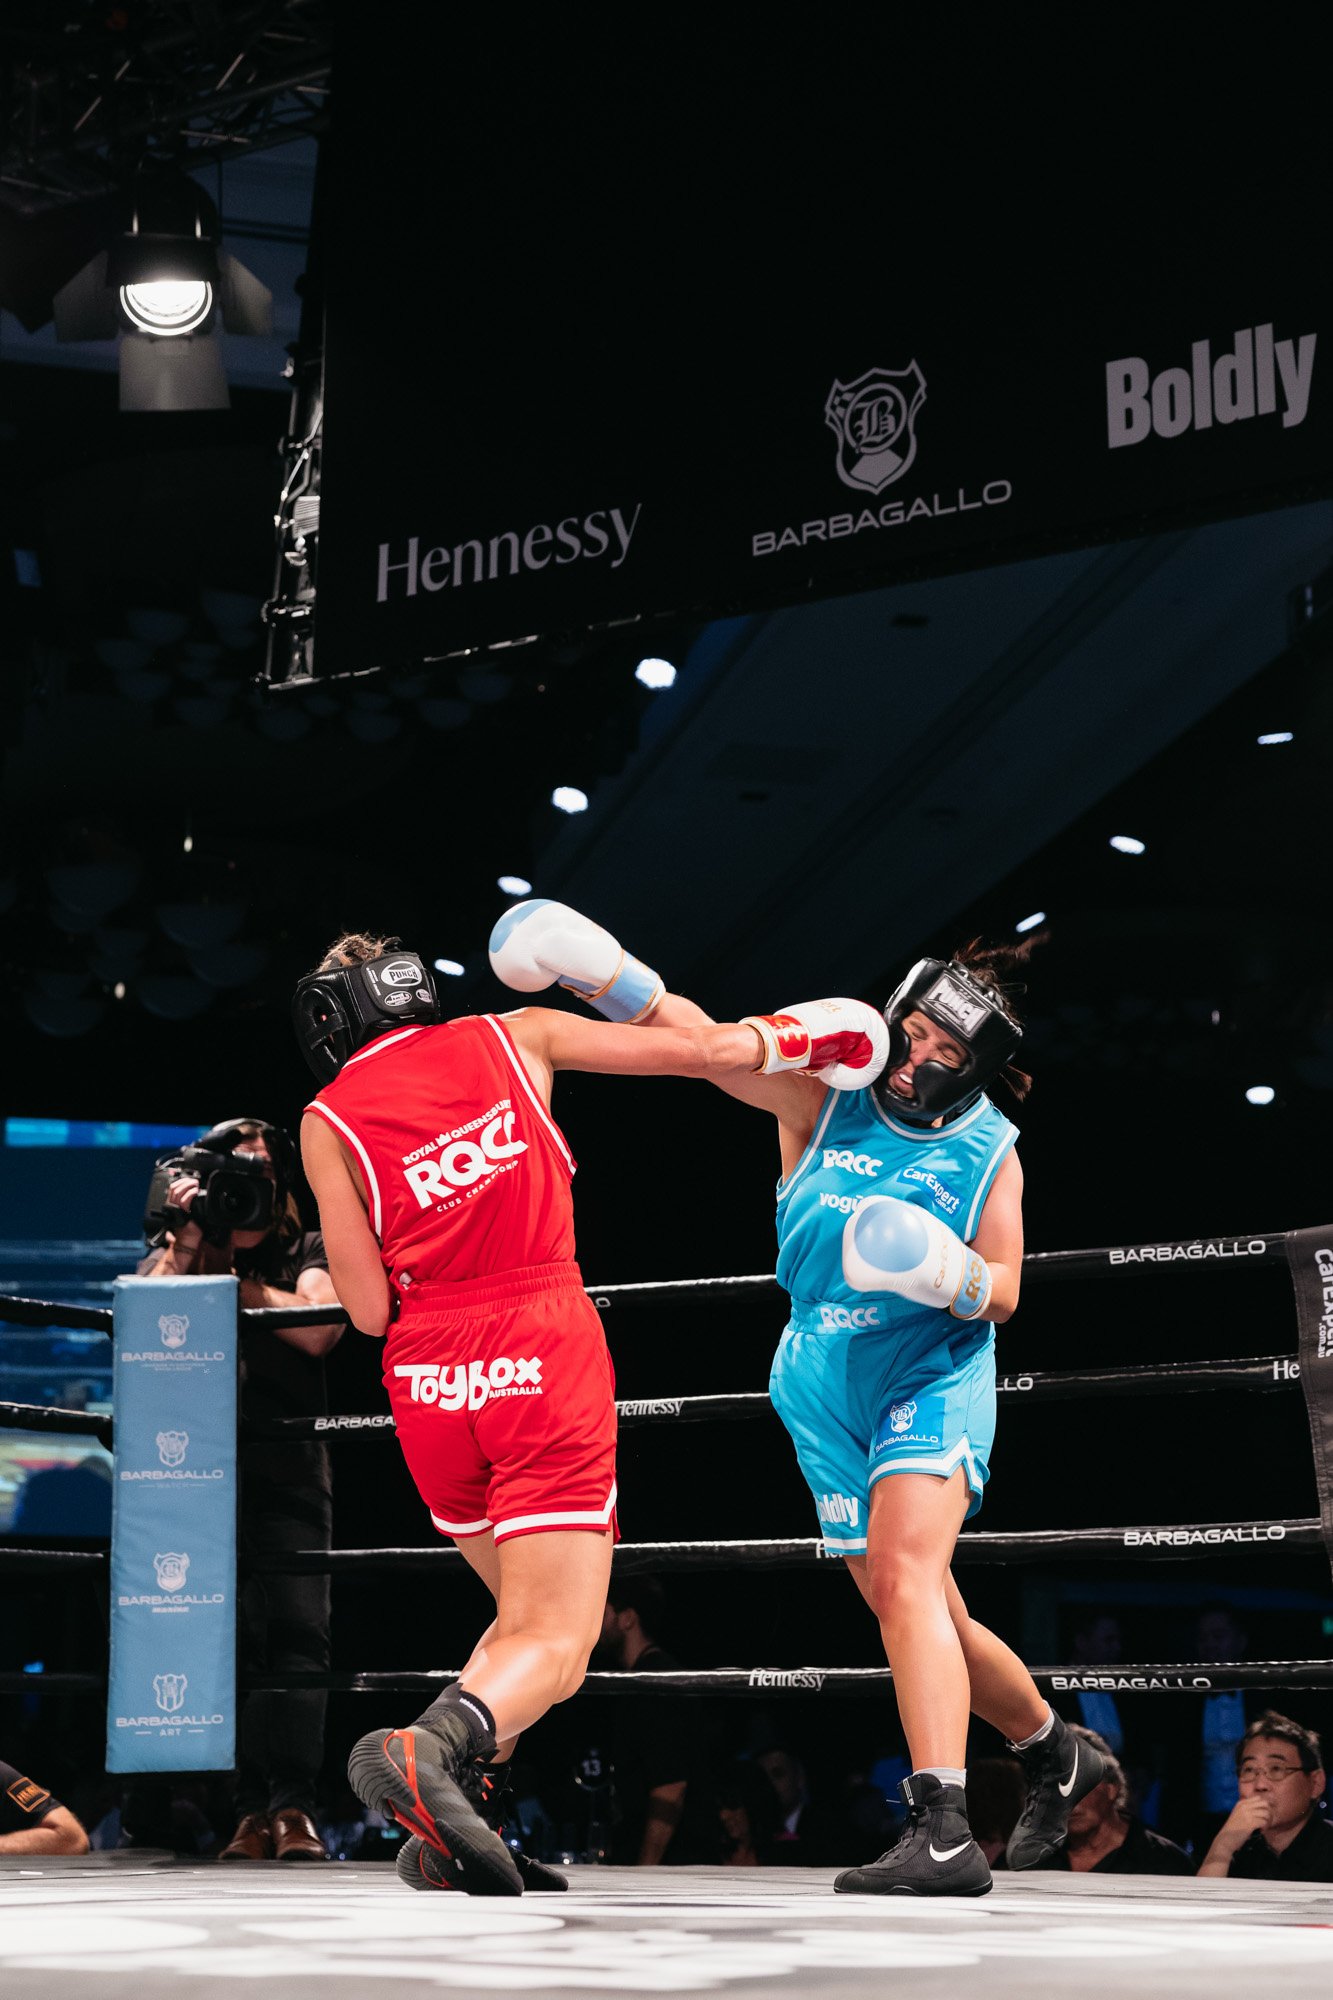 2 boxers fighting